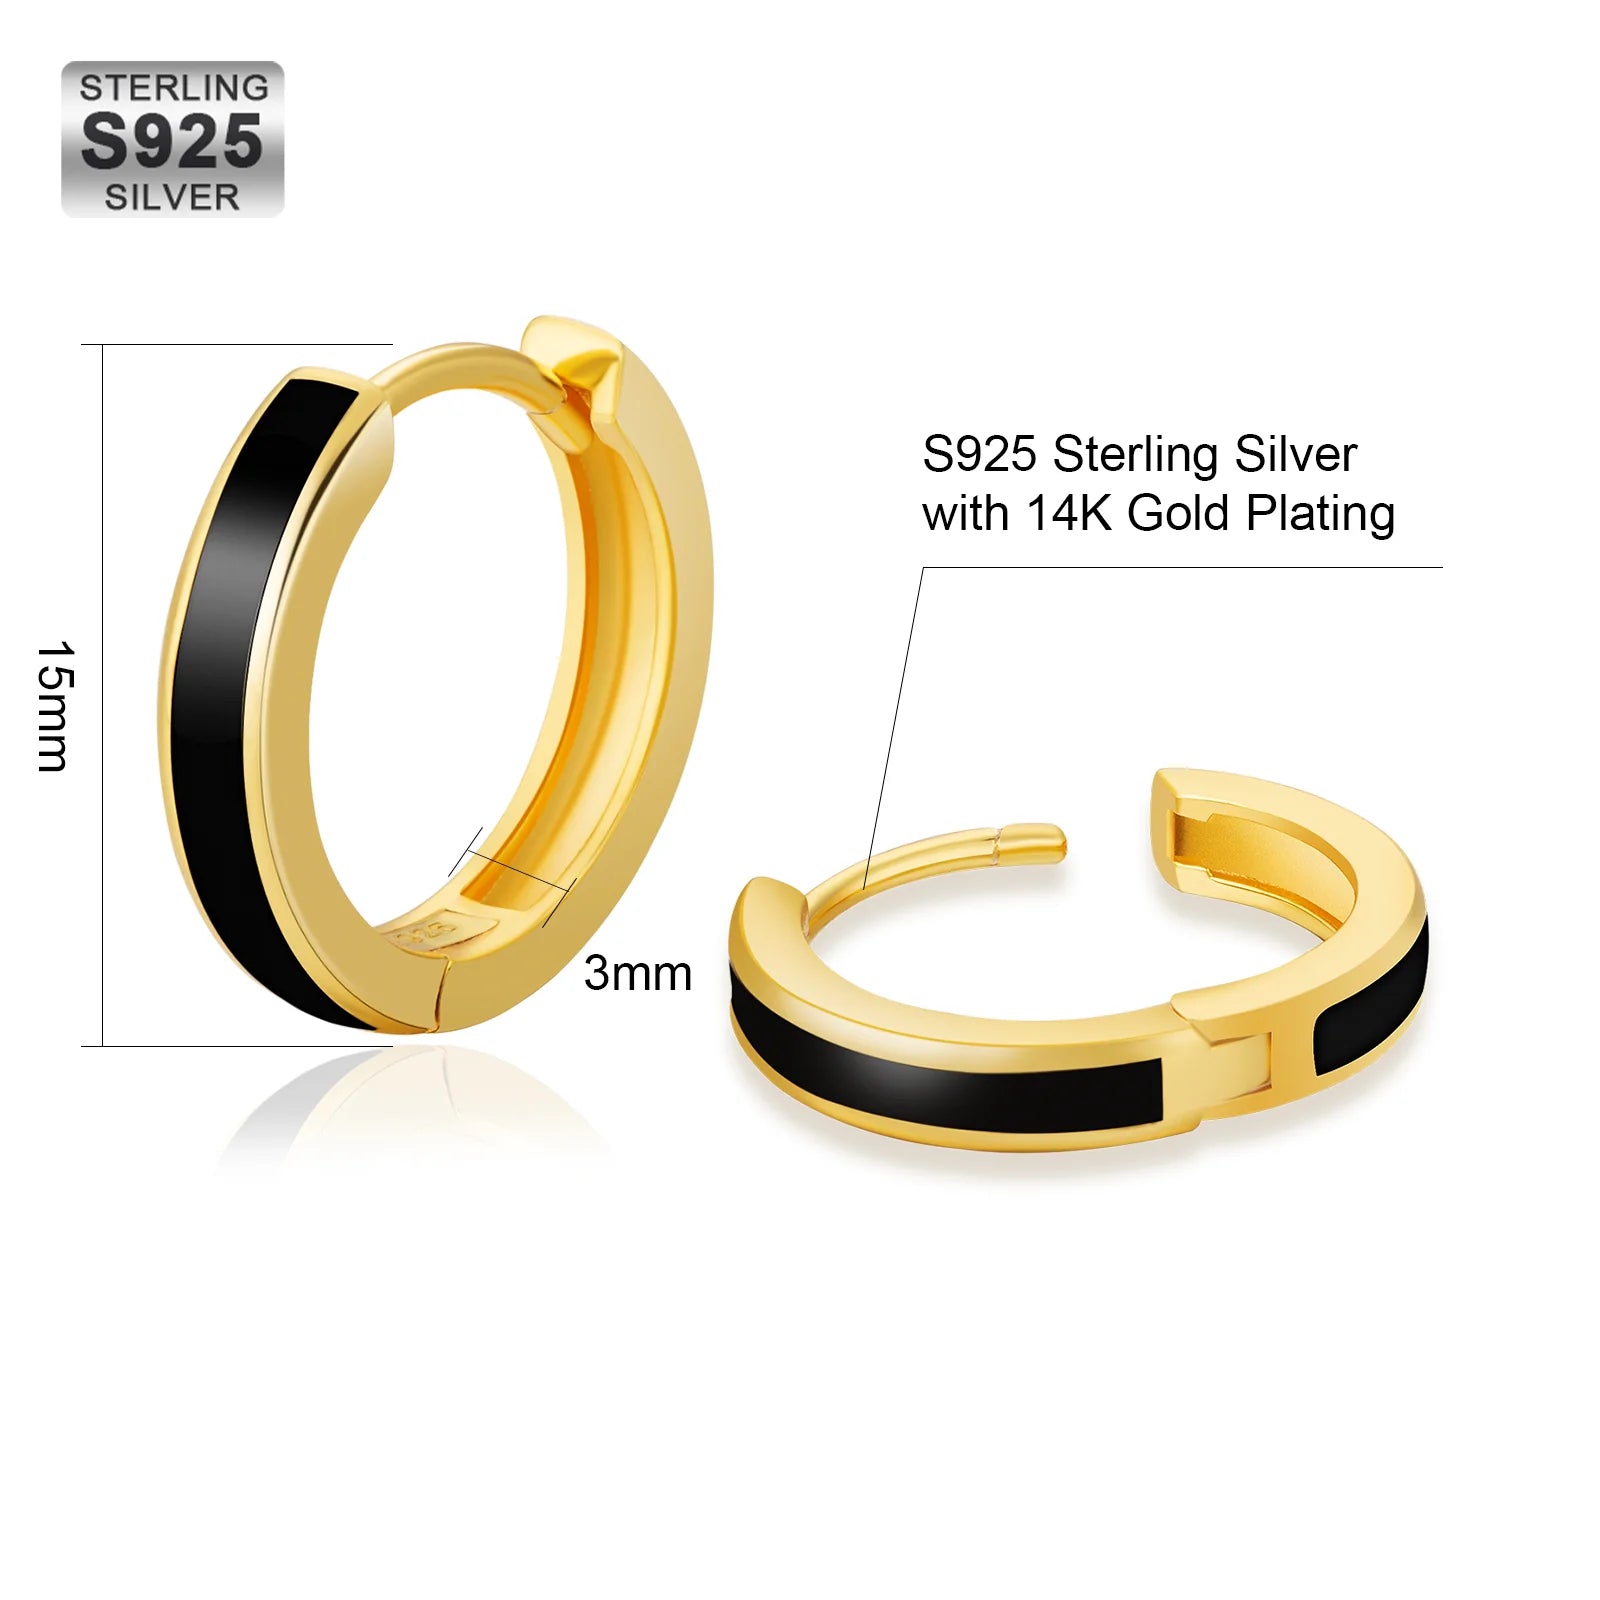 S925 Silver Sleek Black Hoop Earrings in 14K Gold - 15mm Earrings 